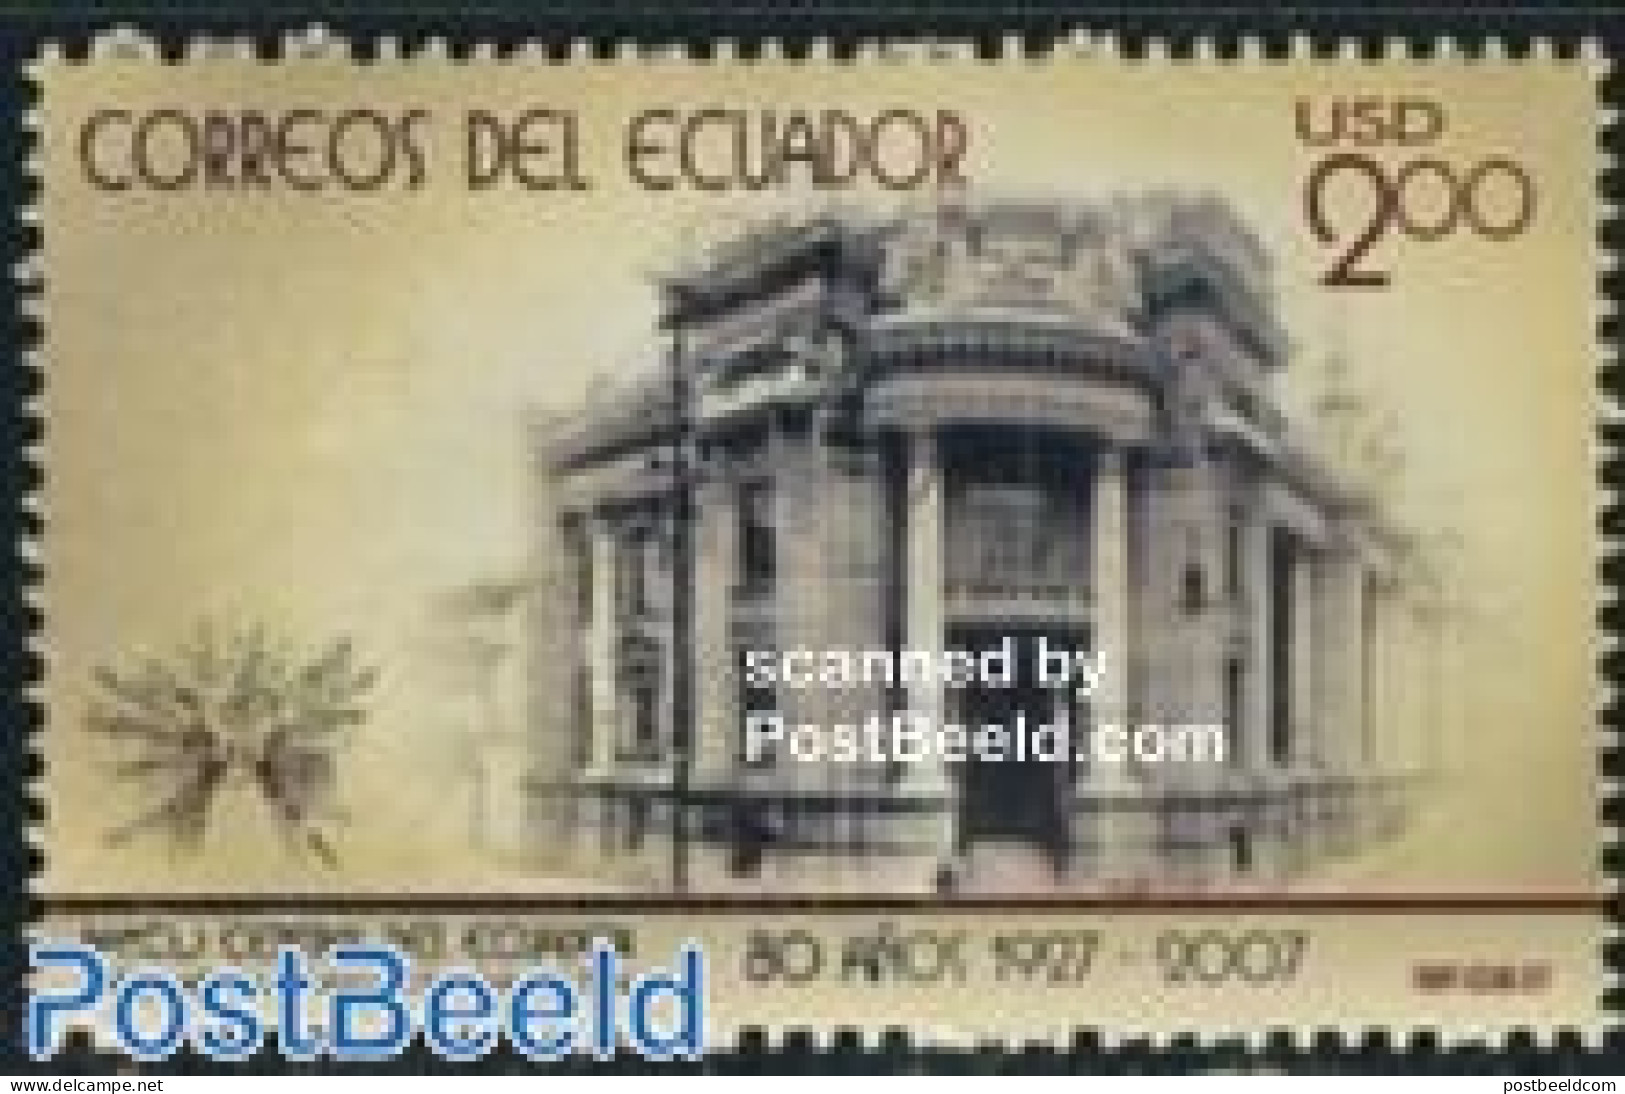 Ecuador 2007 80 Years Central Bank 1v, Mint NH, Various - Banking And Insurance - Equateur